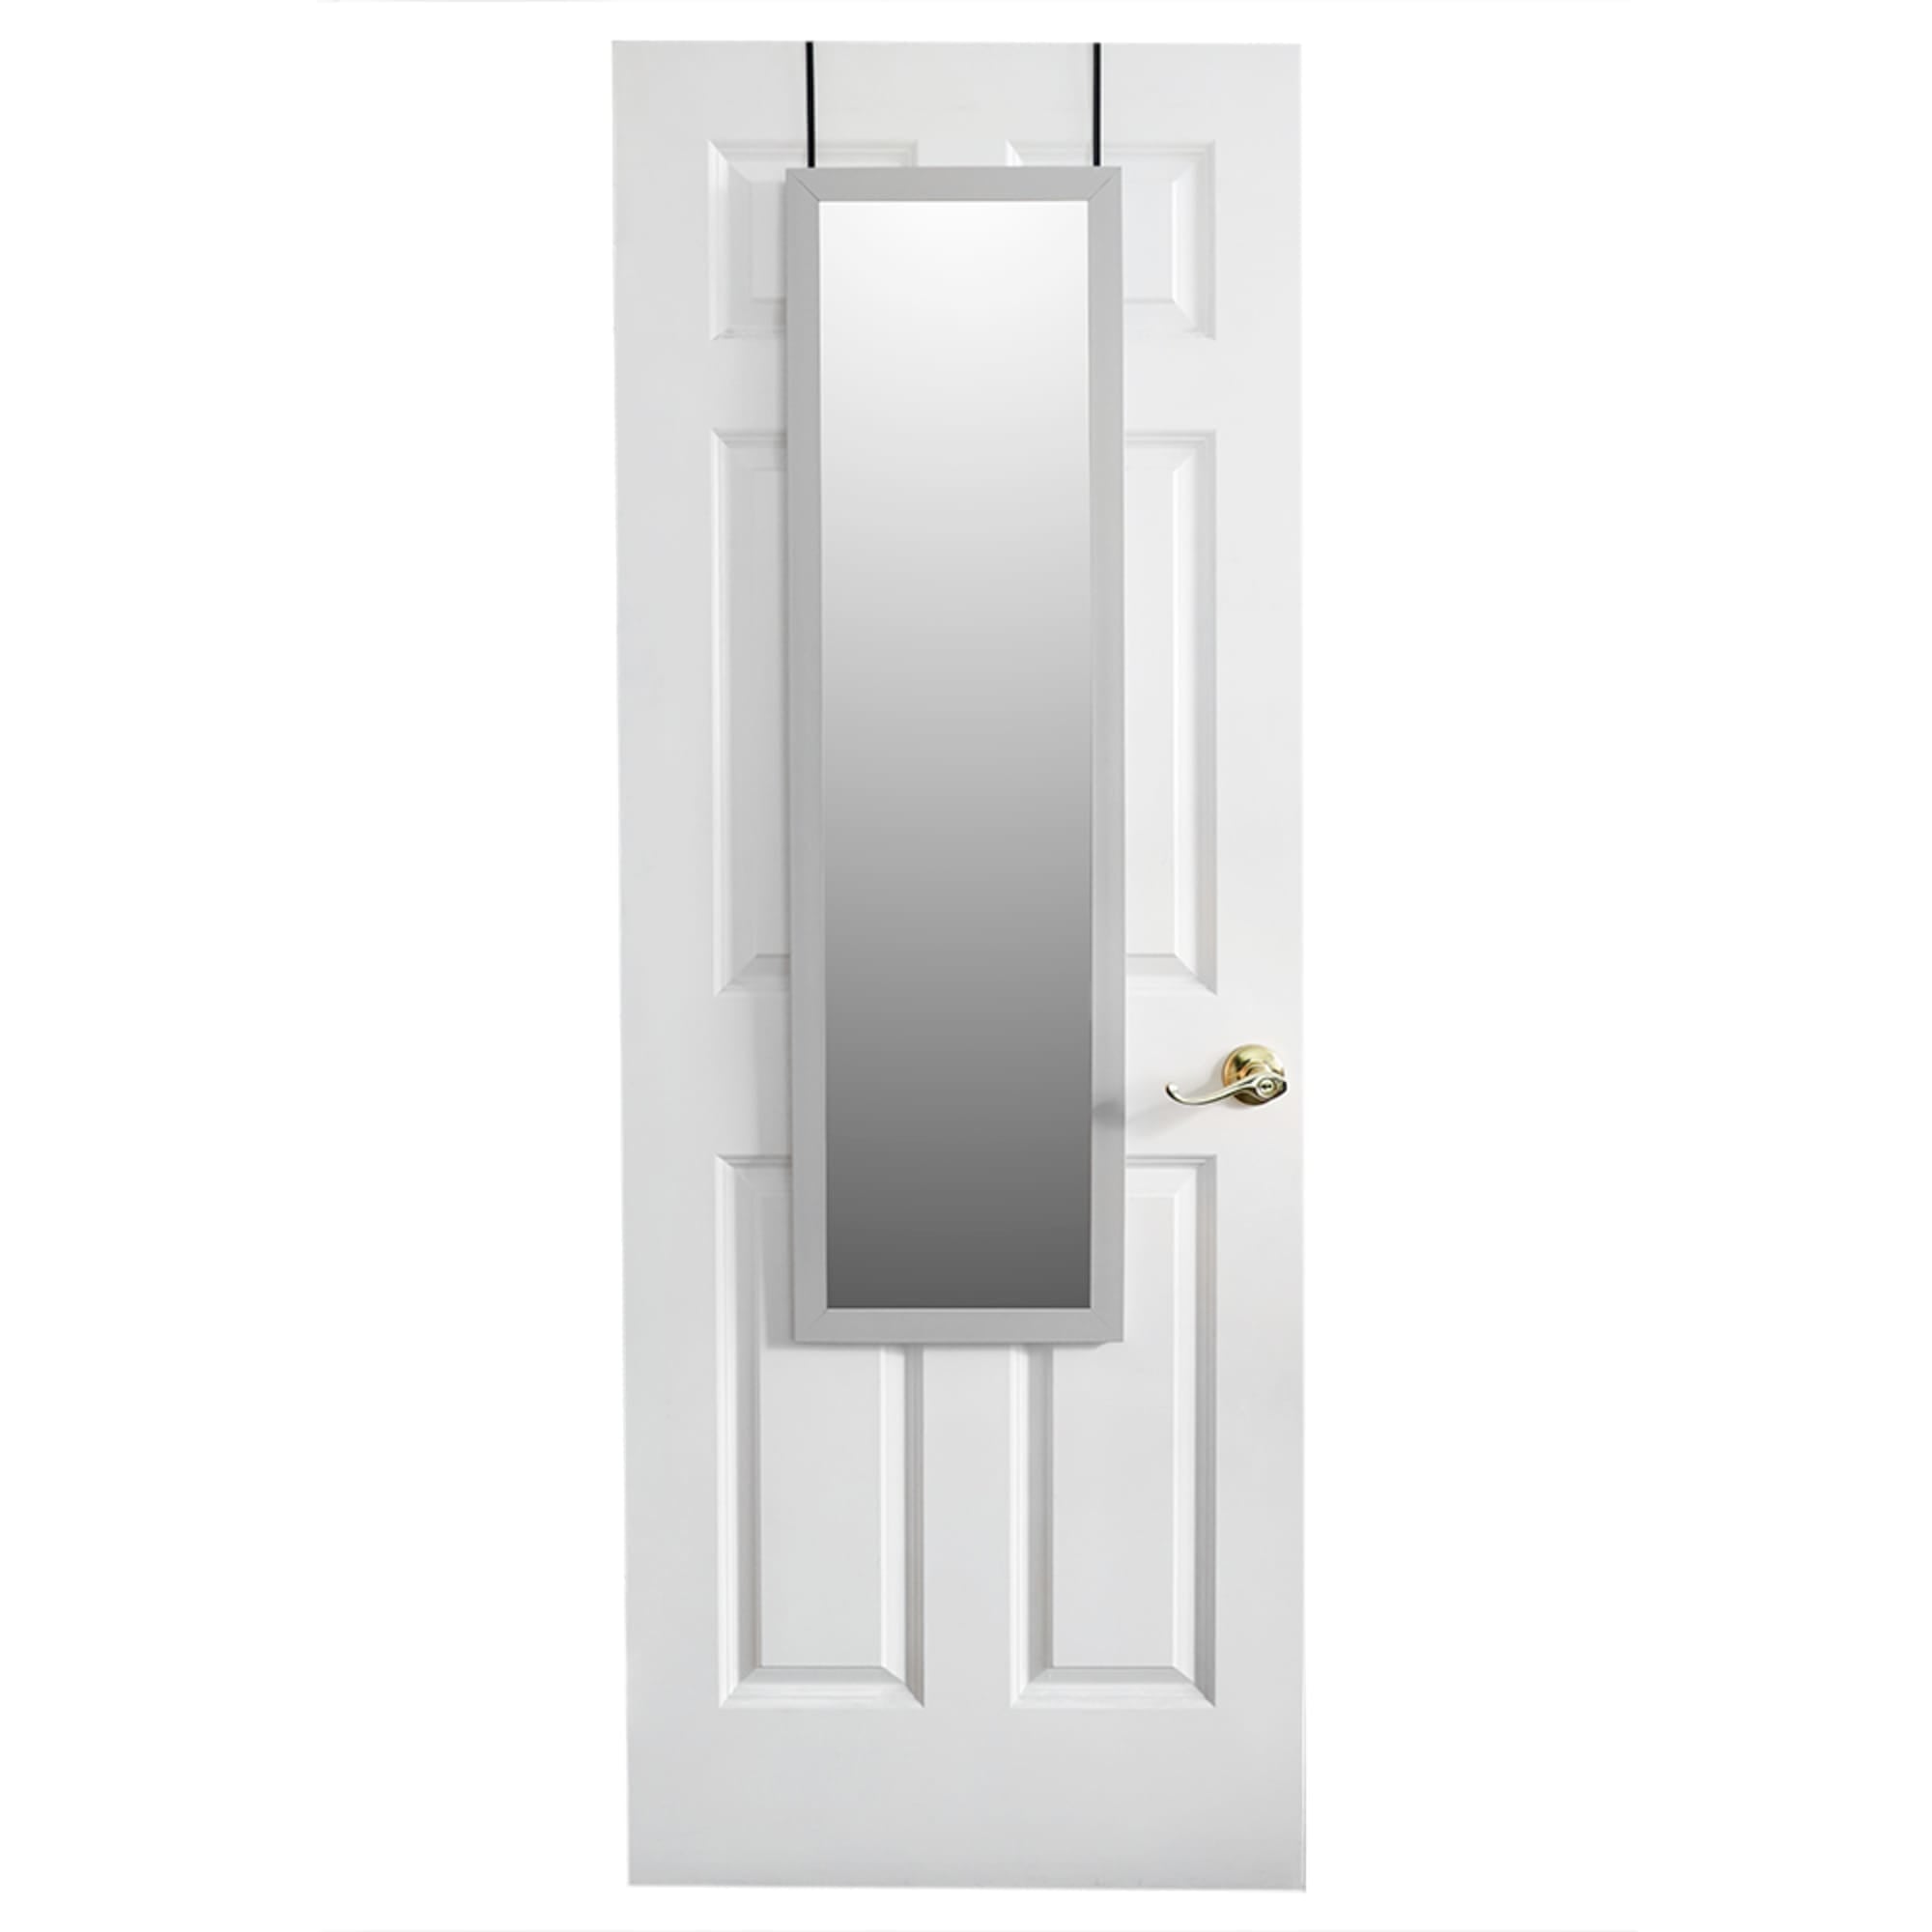 Home Basics Framed MDF Over the Door Mirror, Grey $12.00 EACH, CASE PACK OF 6